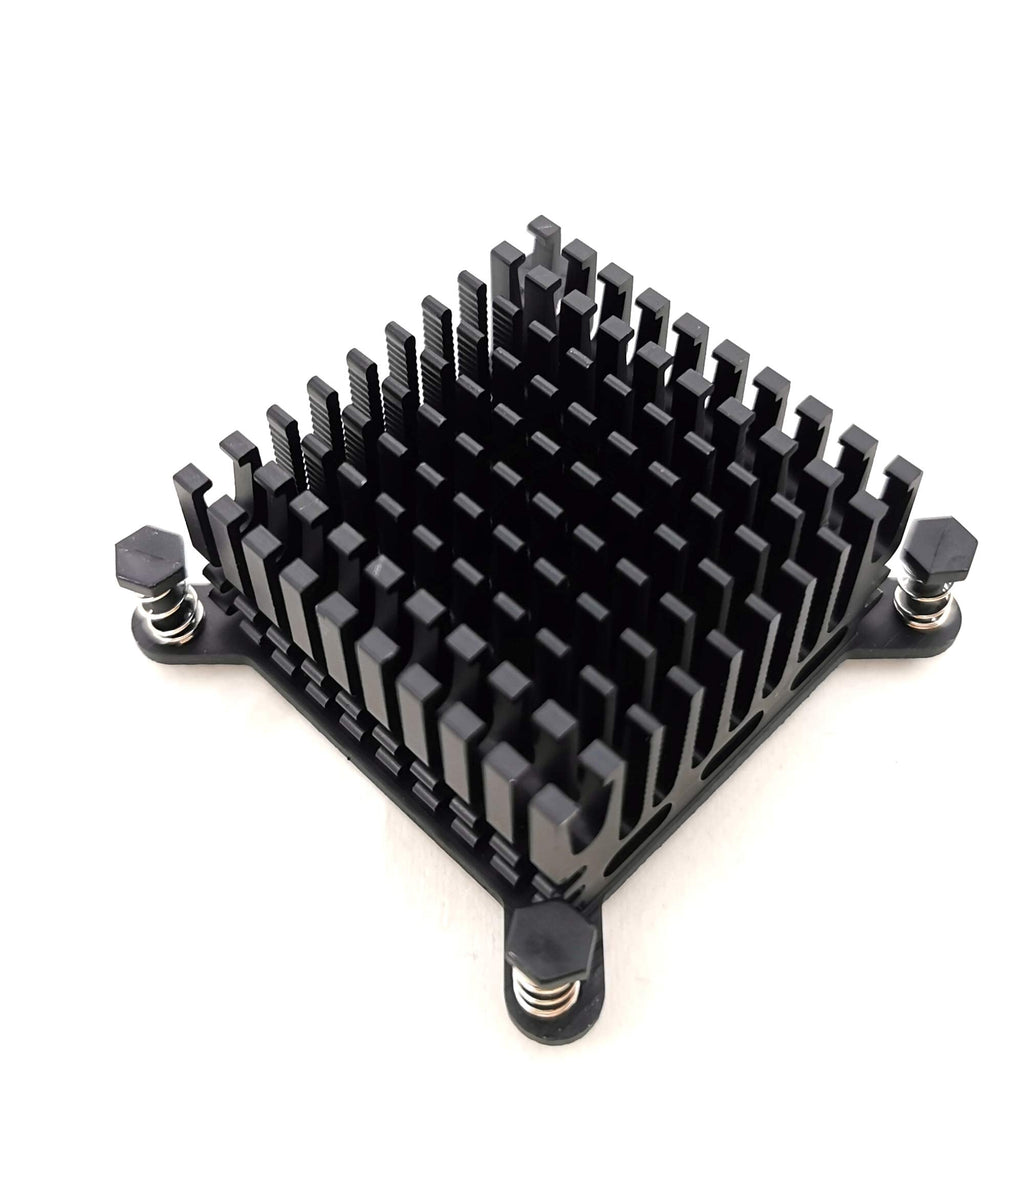 Magntek 2pcs Aluminum Chipset Heat Radiator Cooling FPGA Heatsink 38mm x 38mm x 20mm Black Anodized RoHS